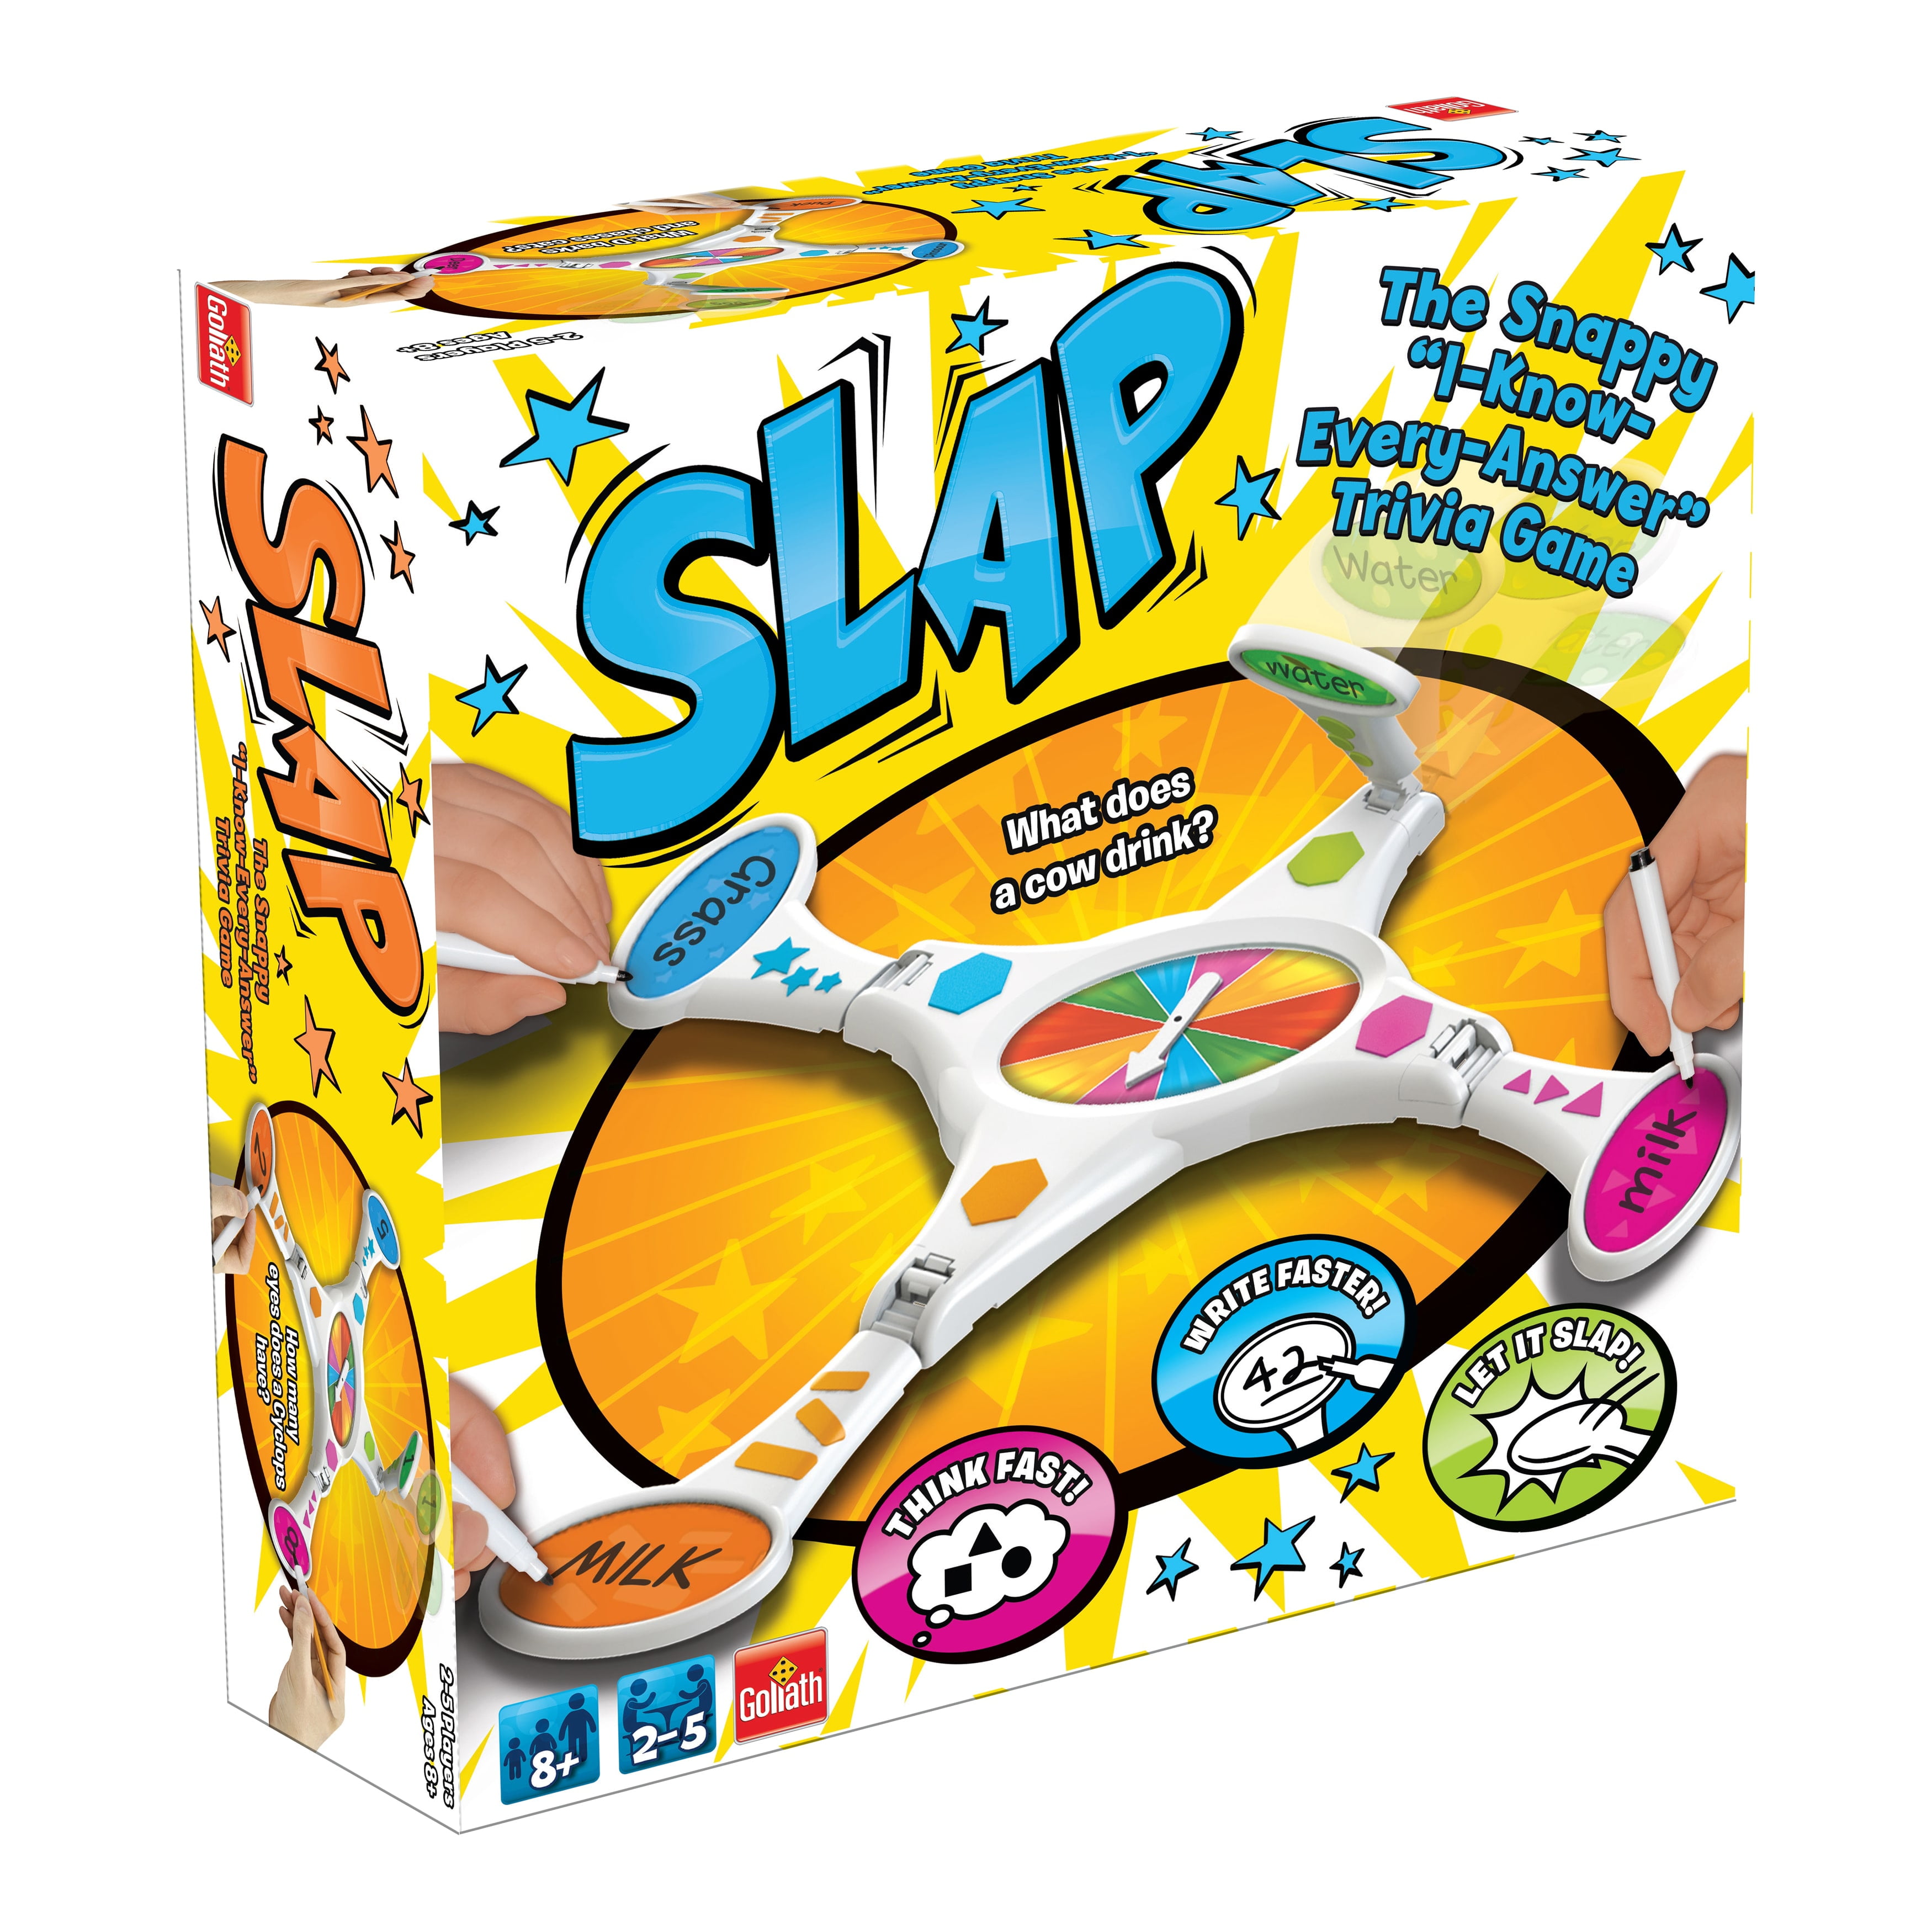 CRAP OR SLAP GAME BRAND NEW & SEALED CHEAP!! 